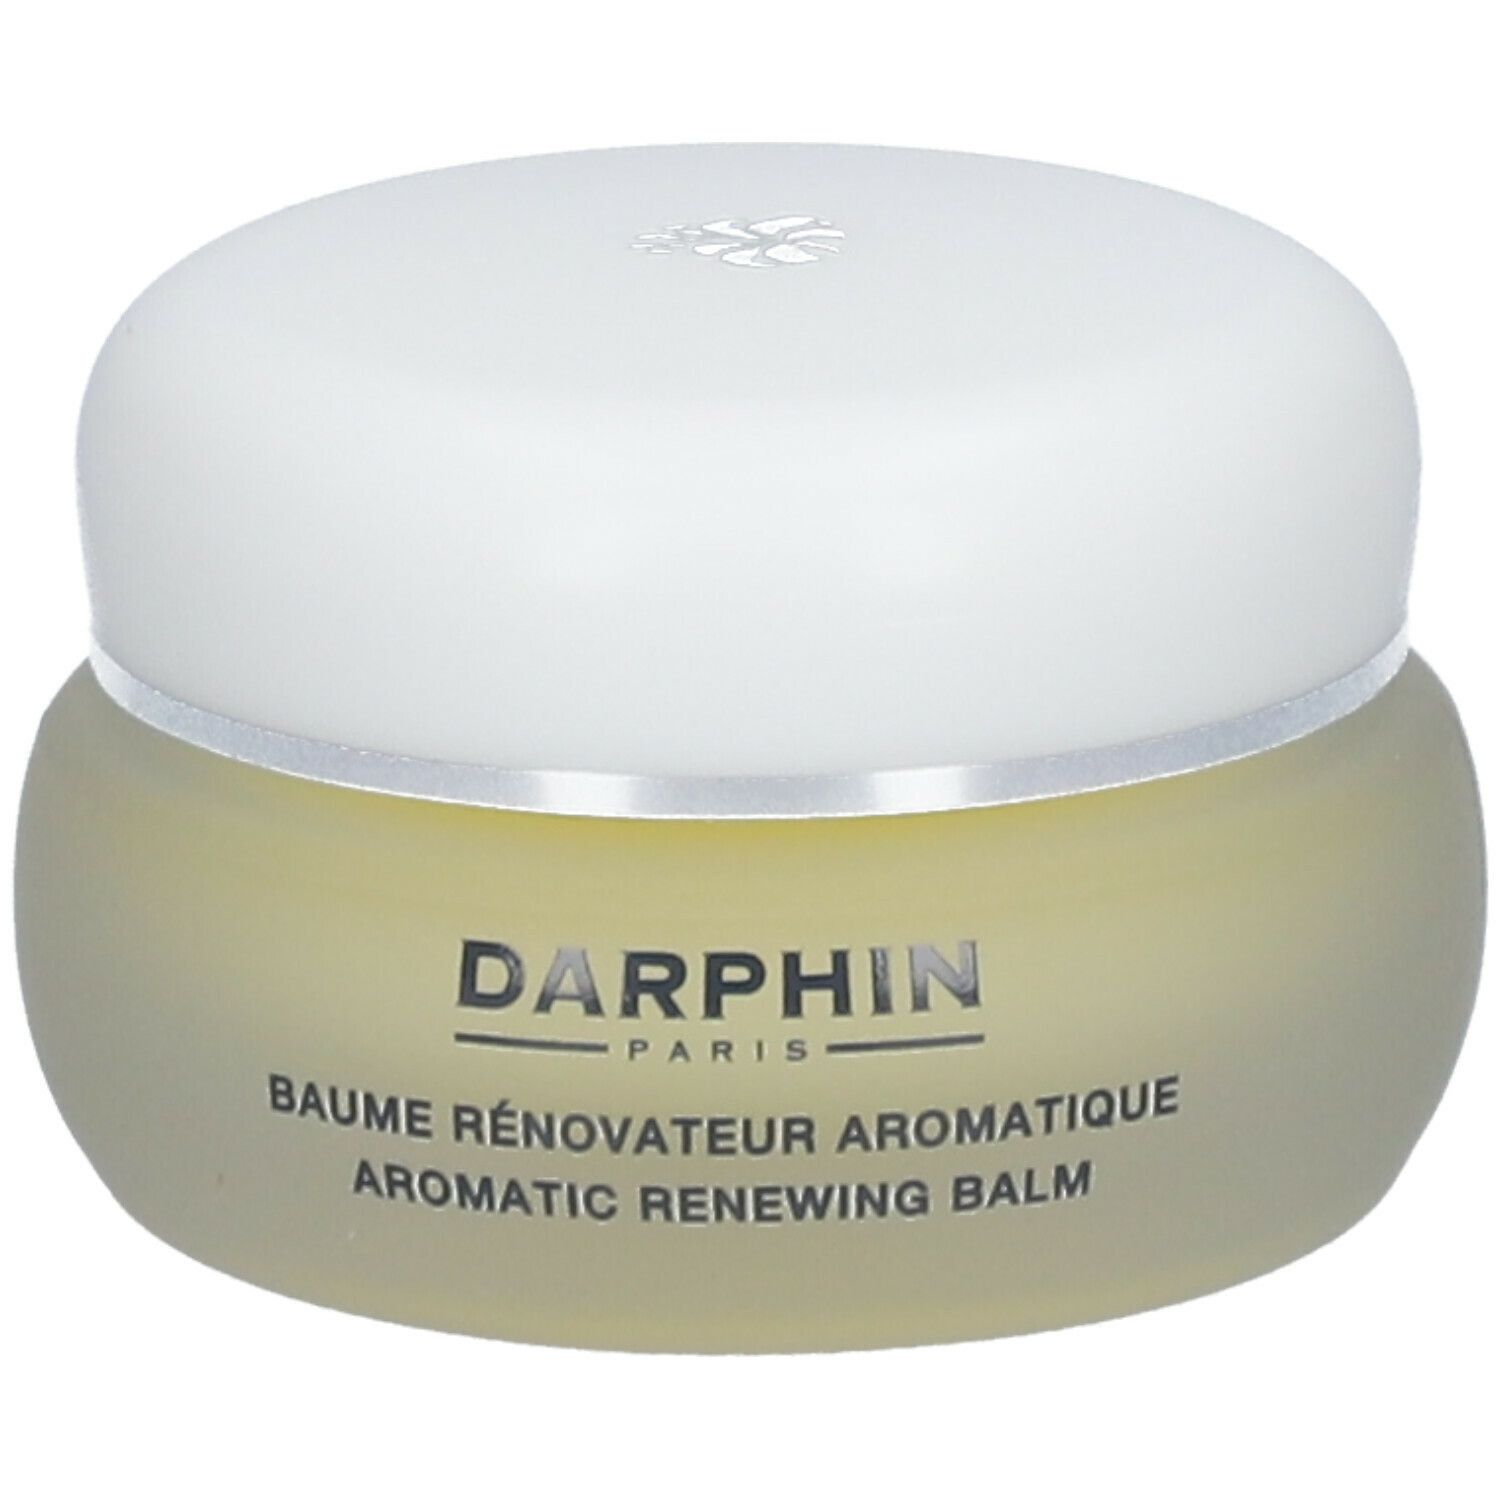 Image of DARPHIN Aromatic Renewing Balm